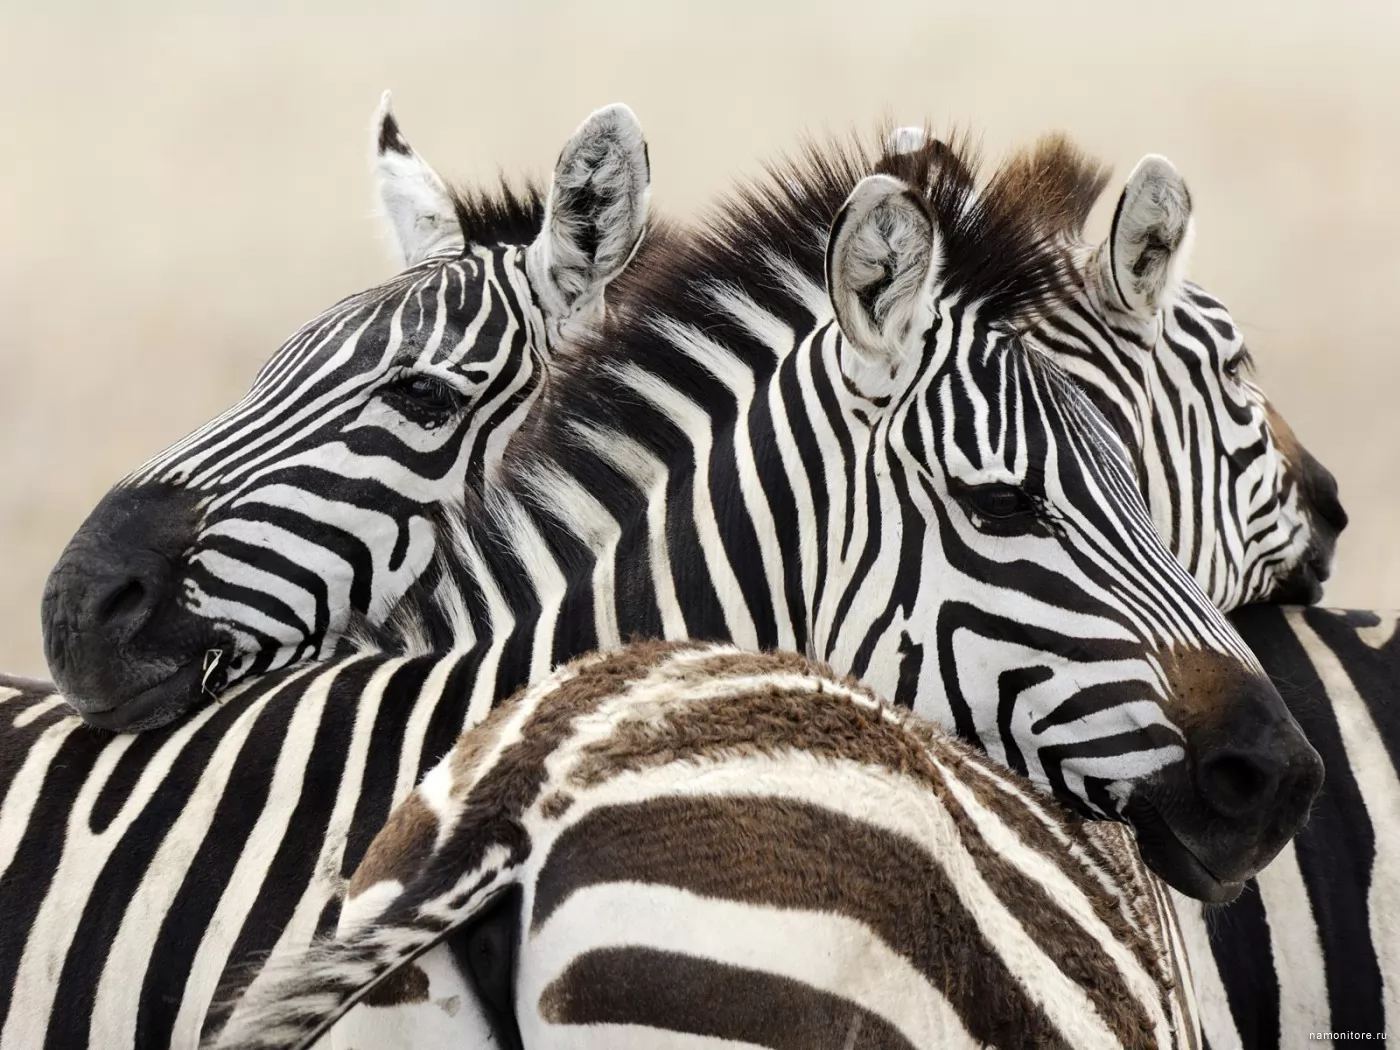 Zebras, animals, black-and-white, zebras x